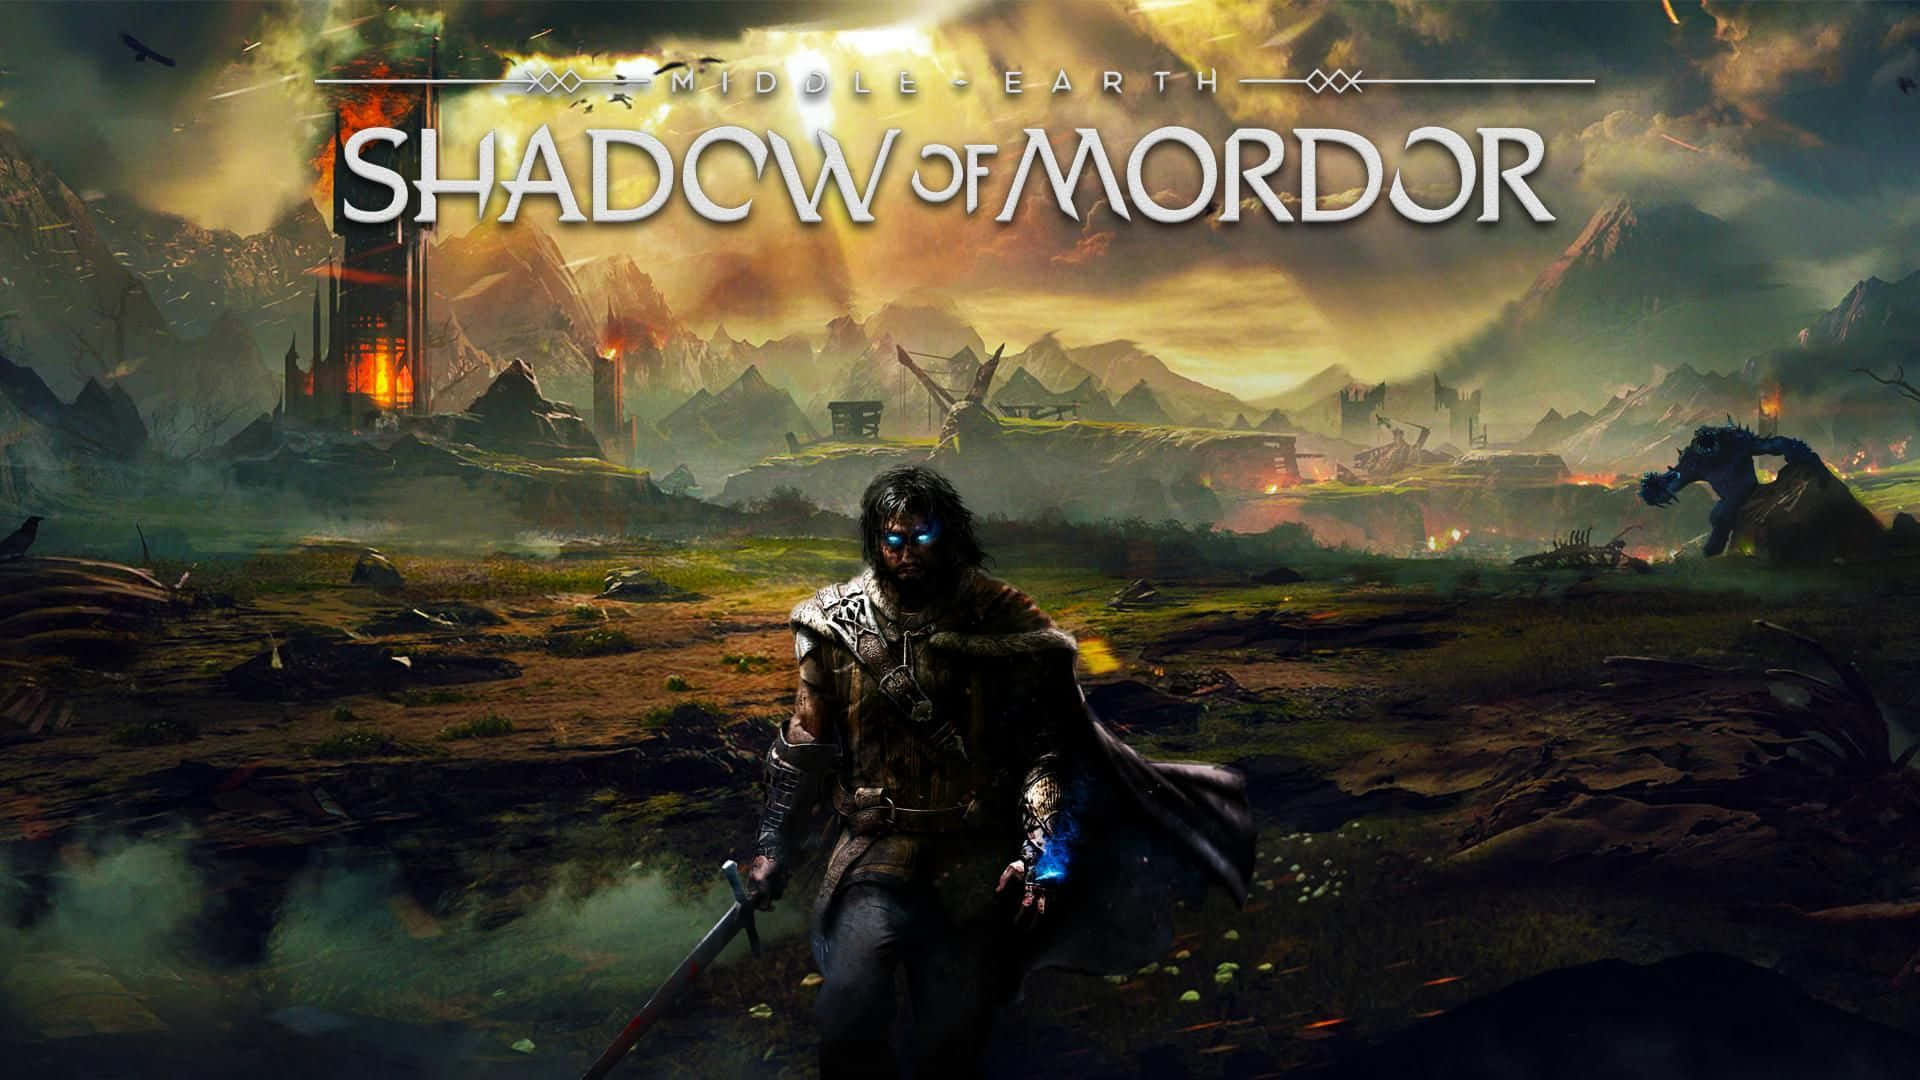 Hd Shadow Of Mordor Burning Background